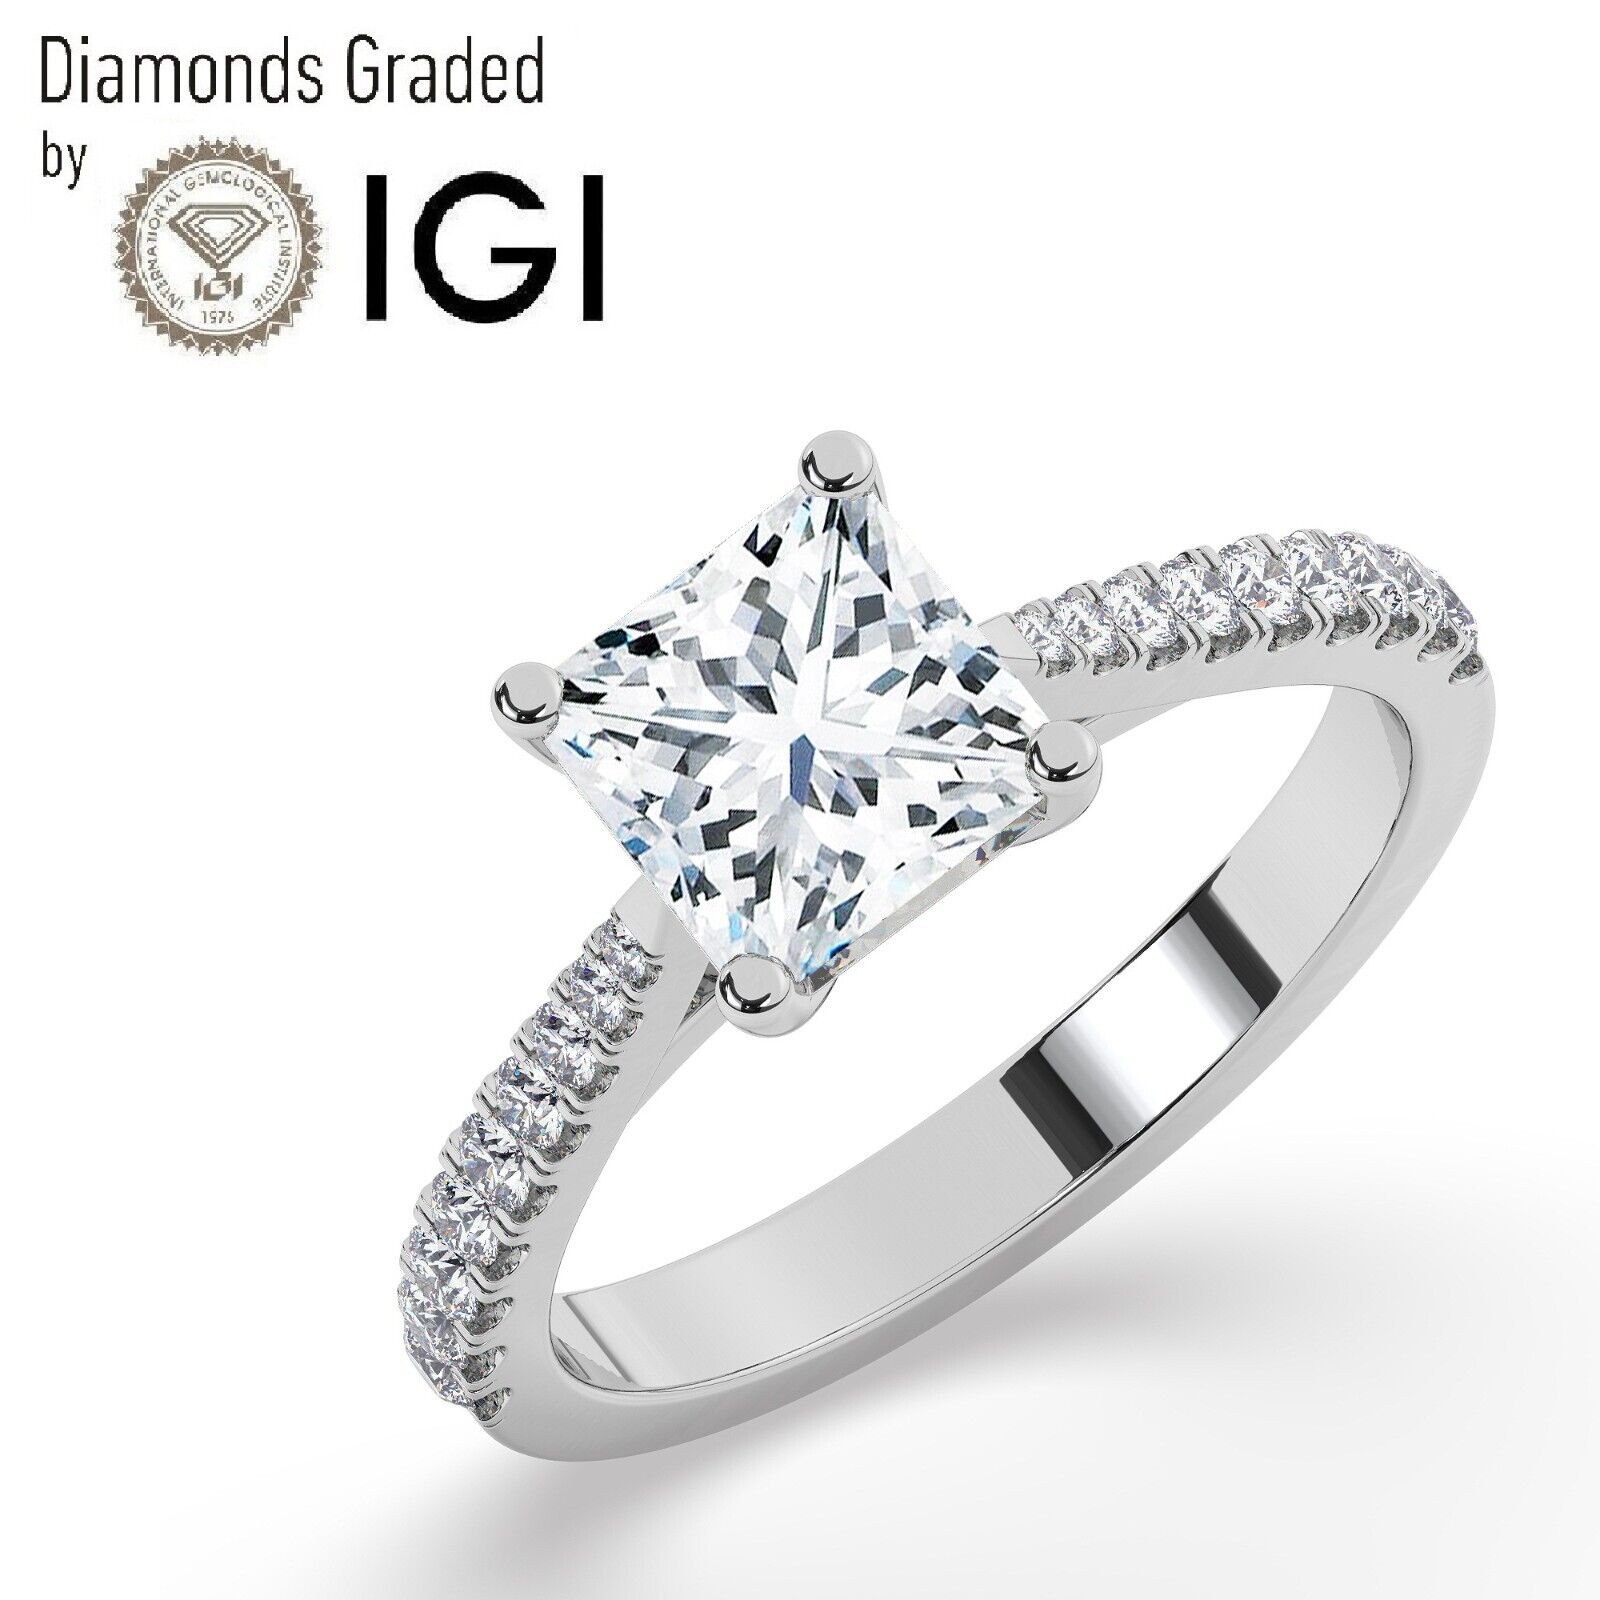 IGI, F/VS1, Solitaire Lab-Grown Princess Diamond Engagement Ring, 950 Platinum